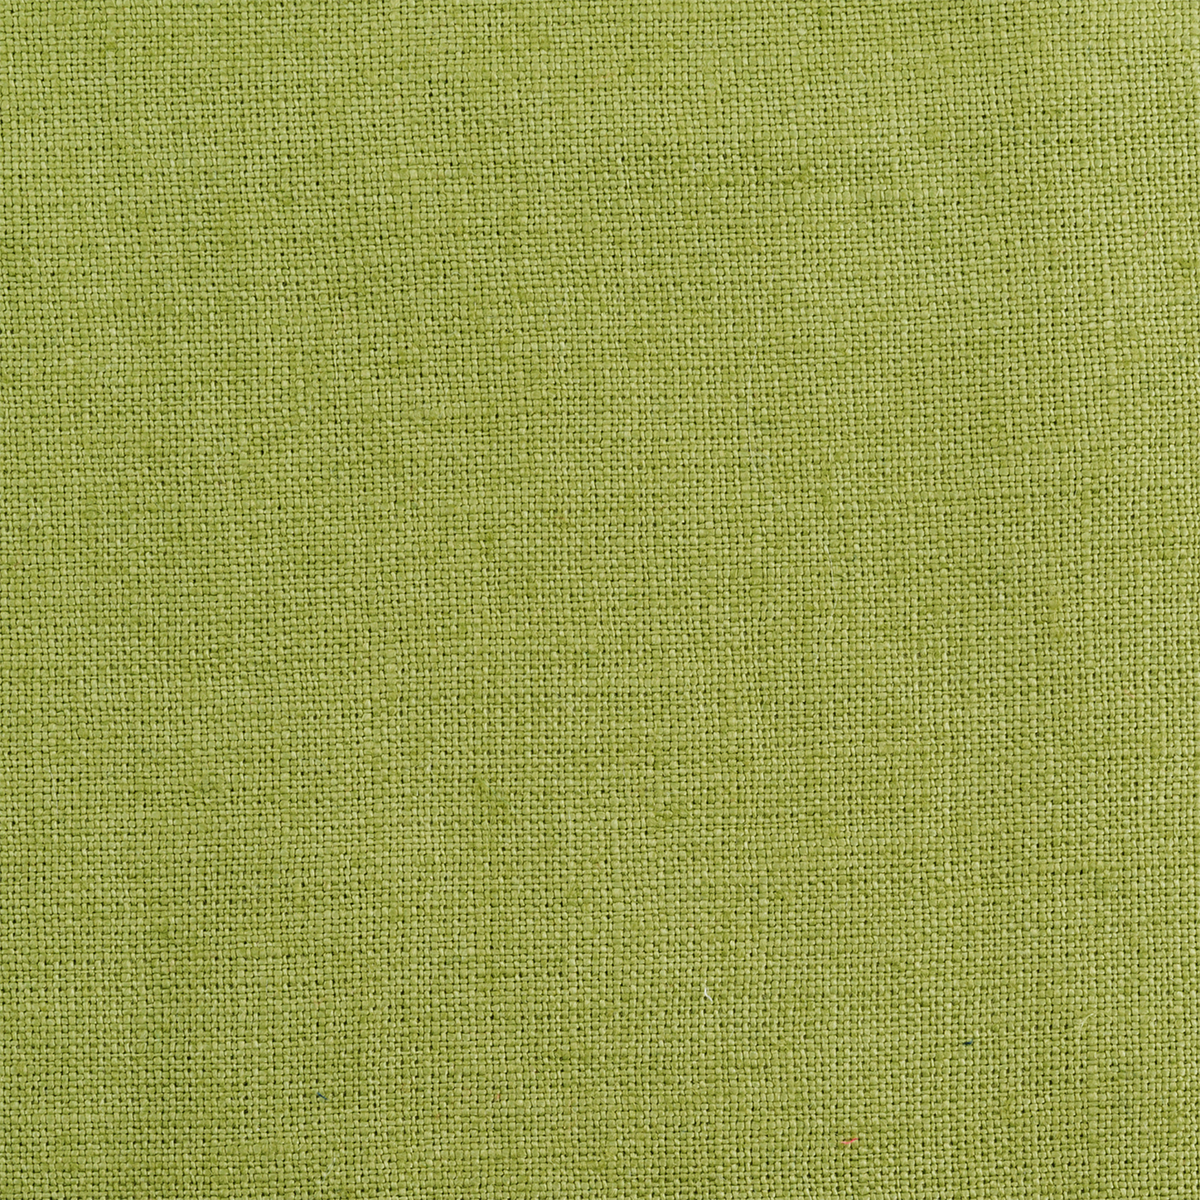 Swatch Sample of Grass Matouk Chelsea Linen Tissue Box Cover